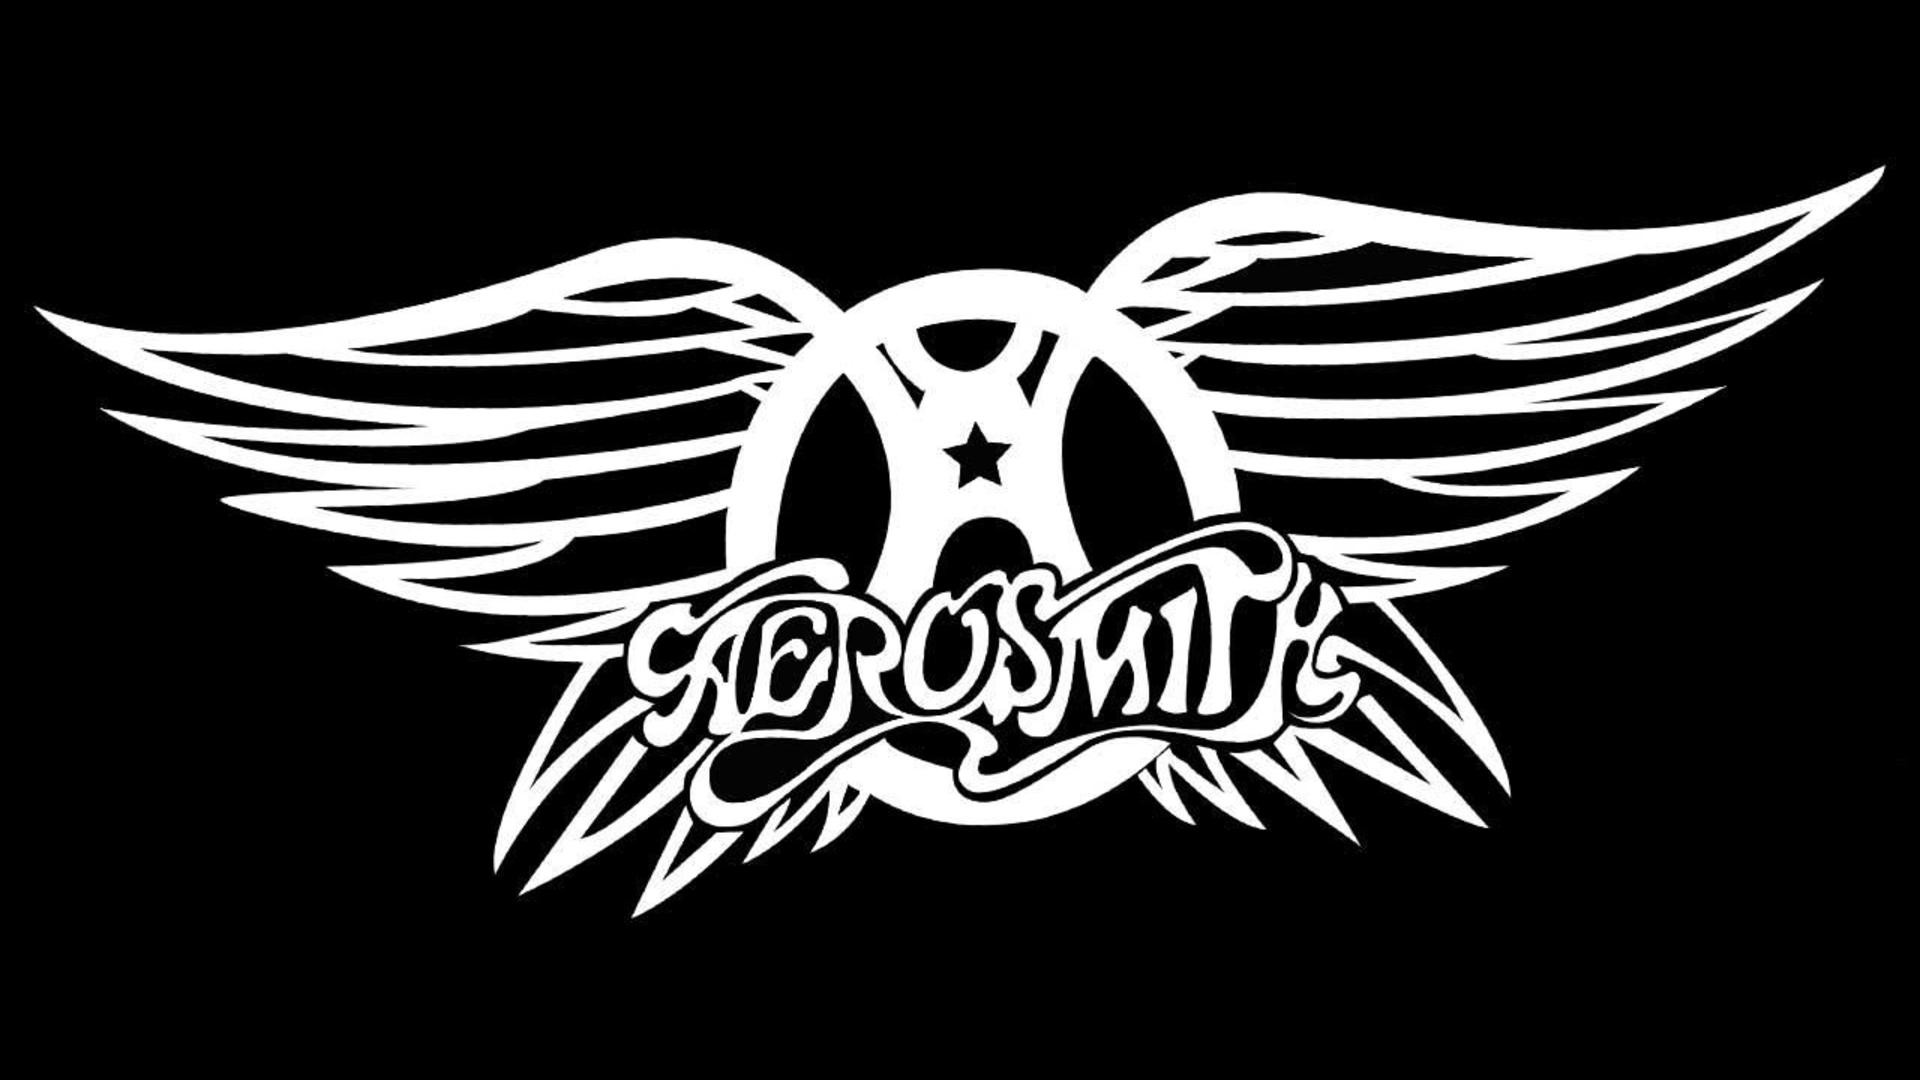 General 1920x1080 Aerosmith music logo monochrome band